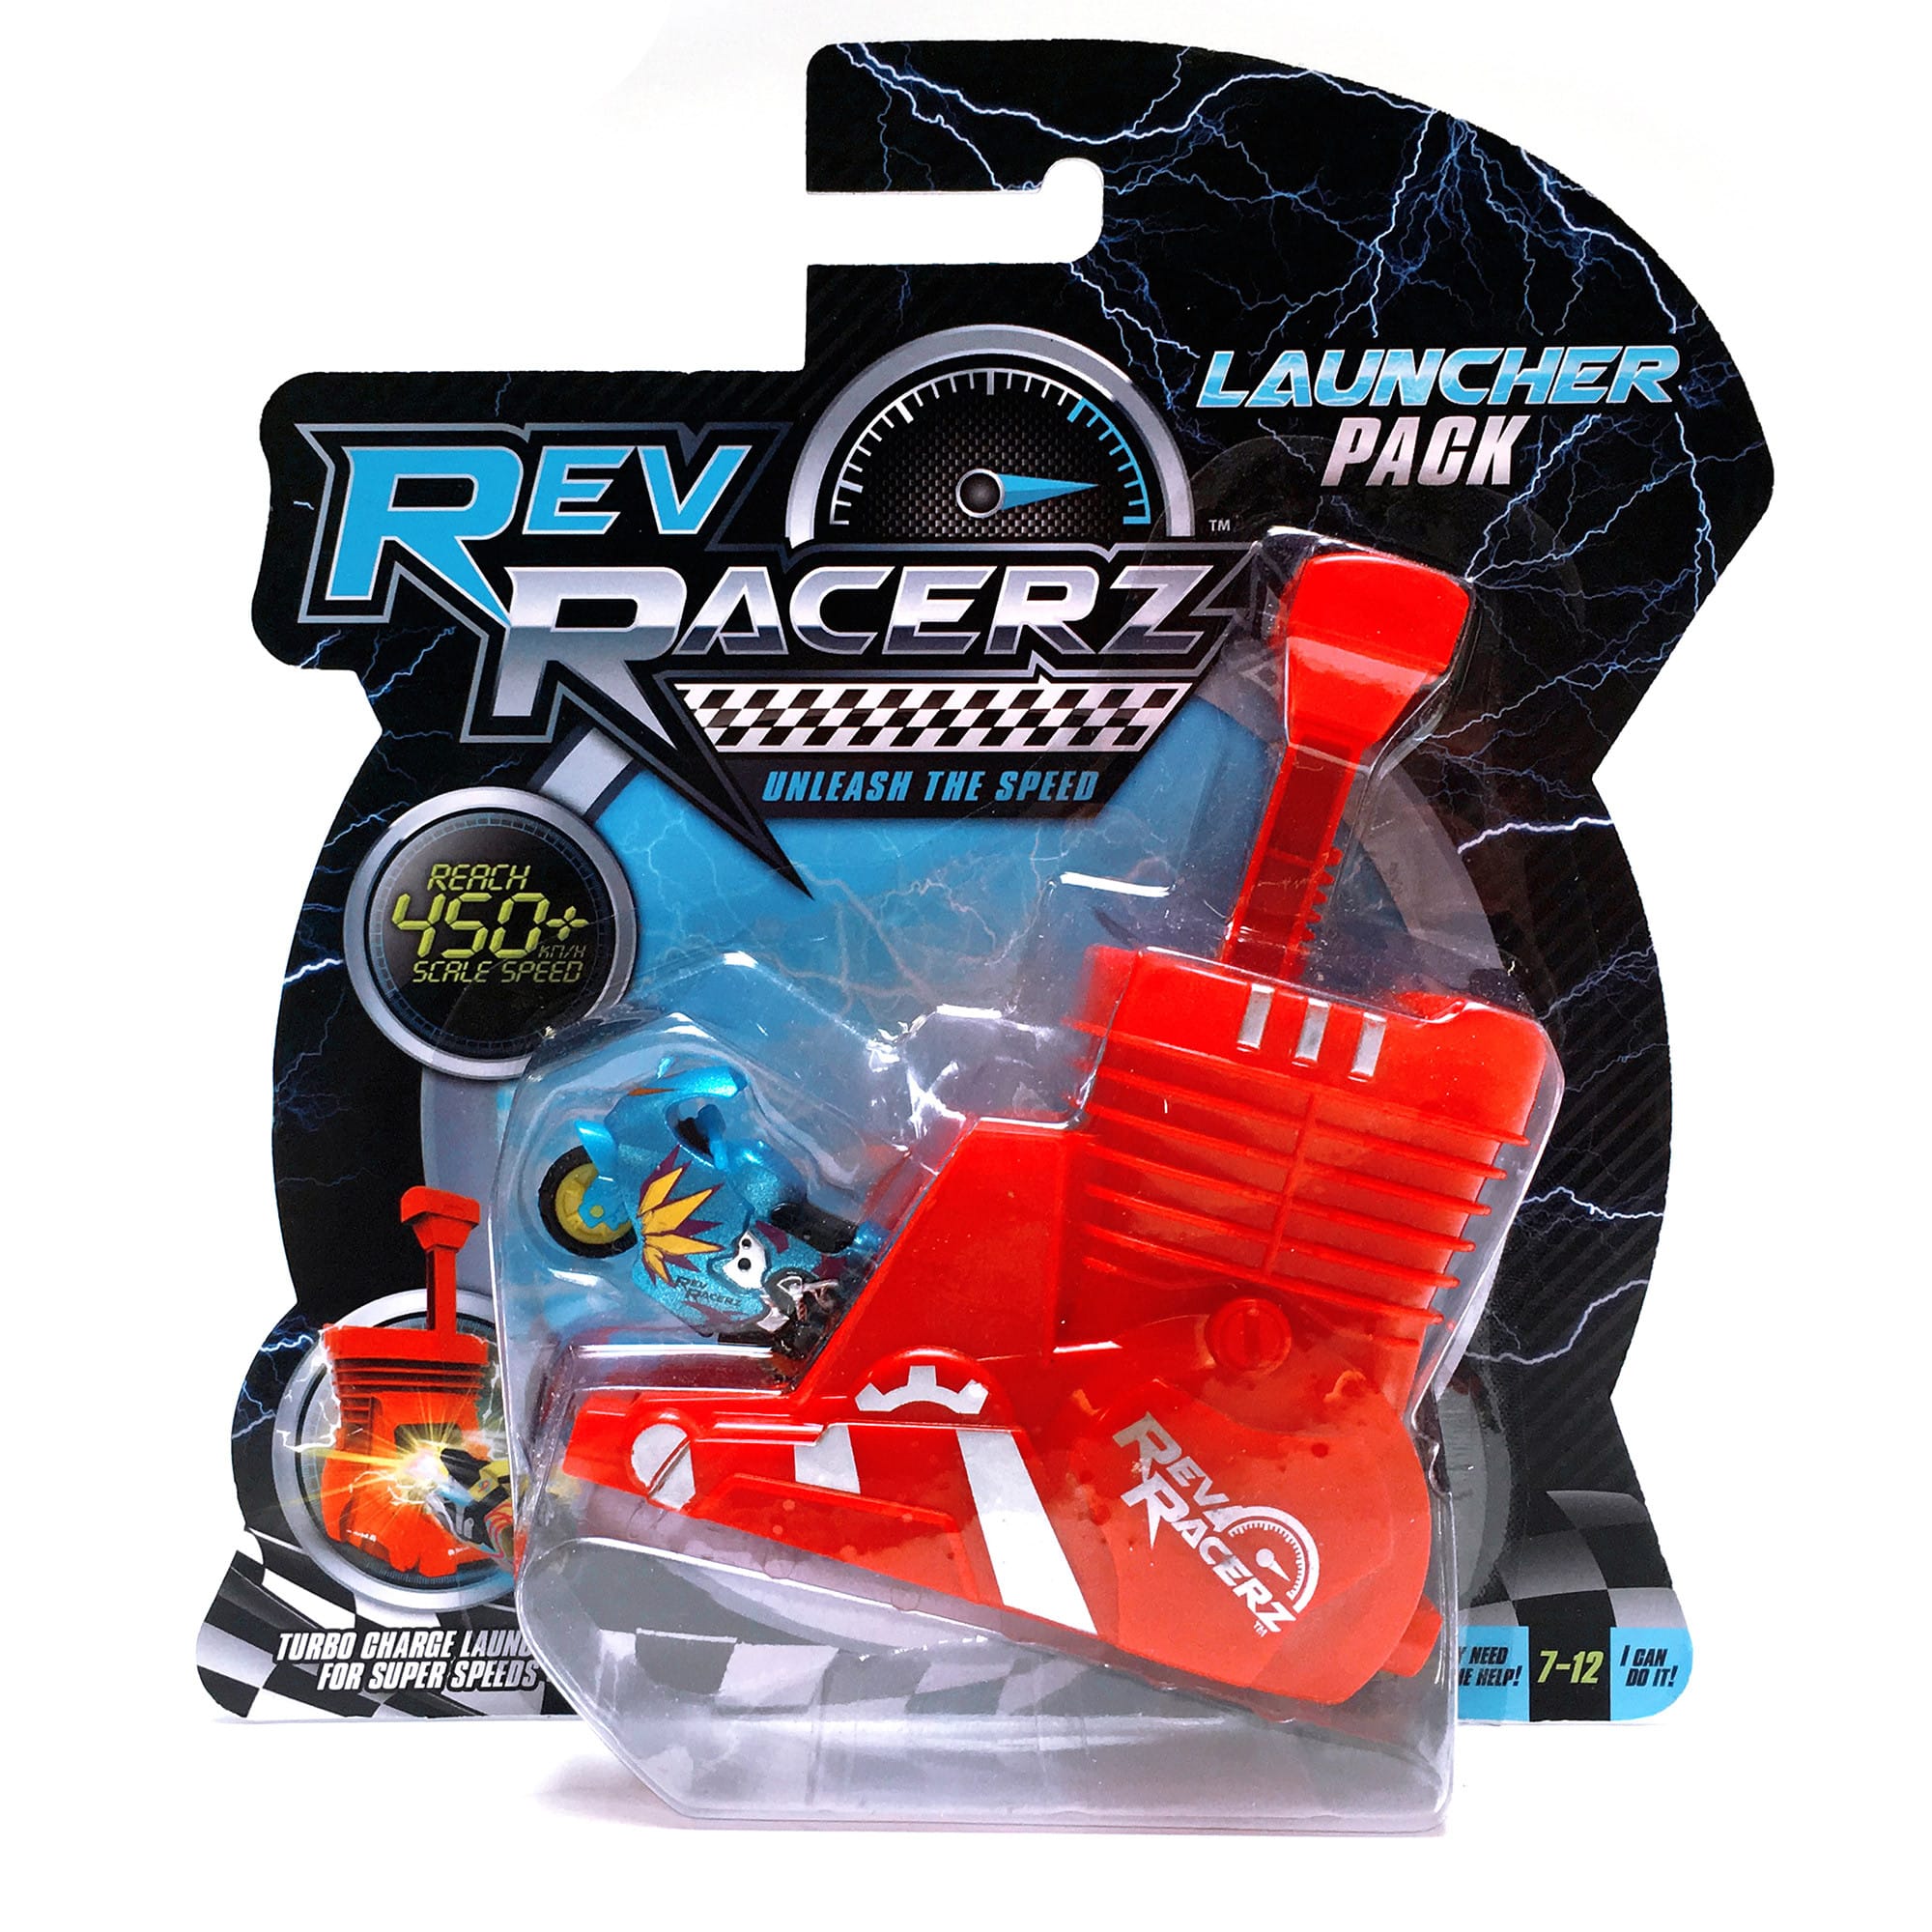 Rev Racerz - Launcher Pack